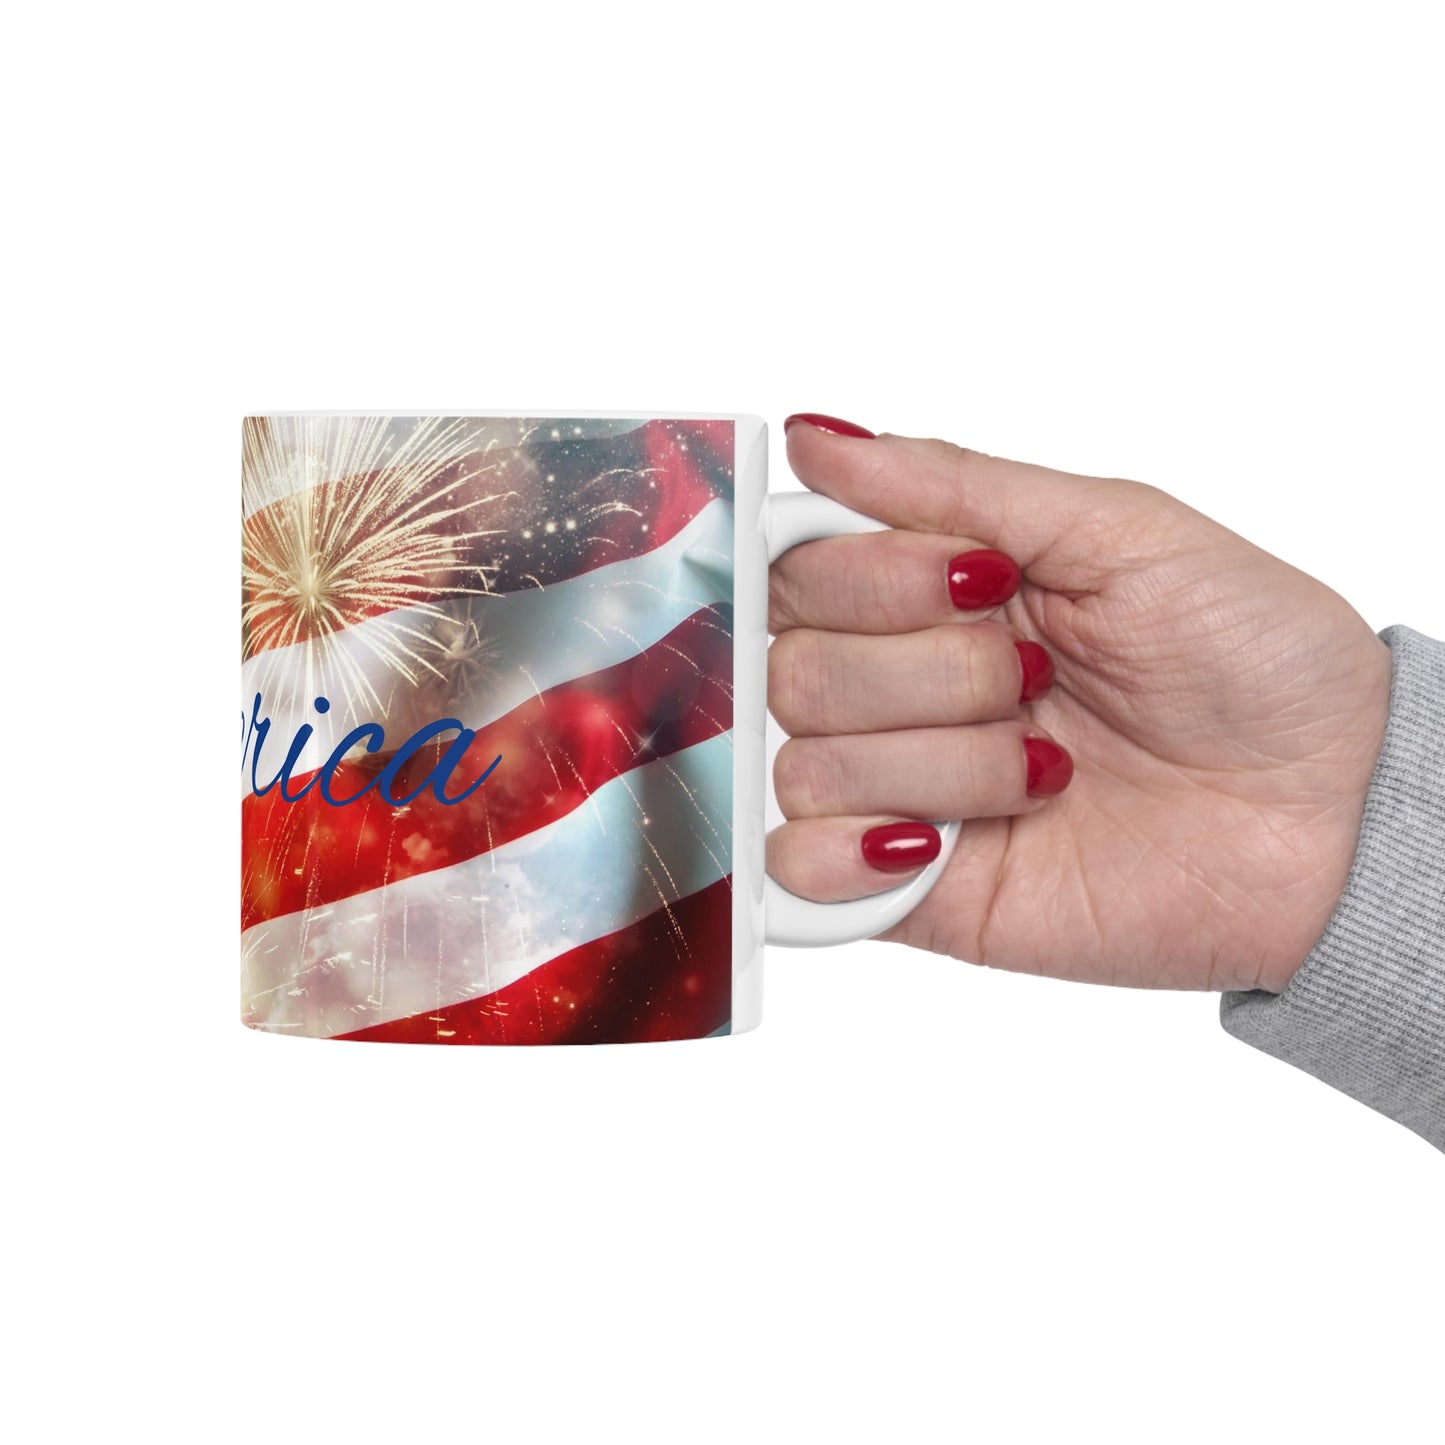 America Independence 11oz Mug